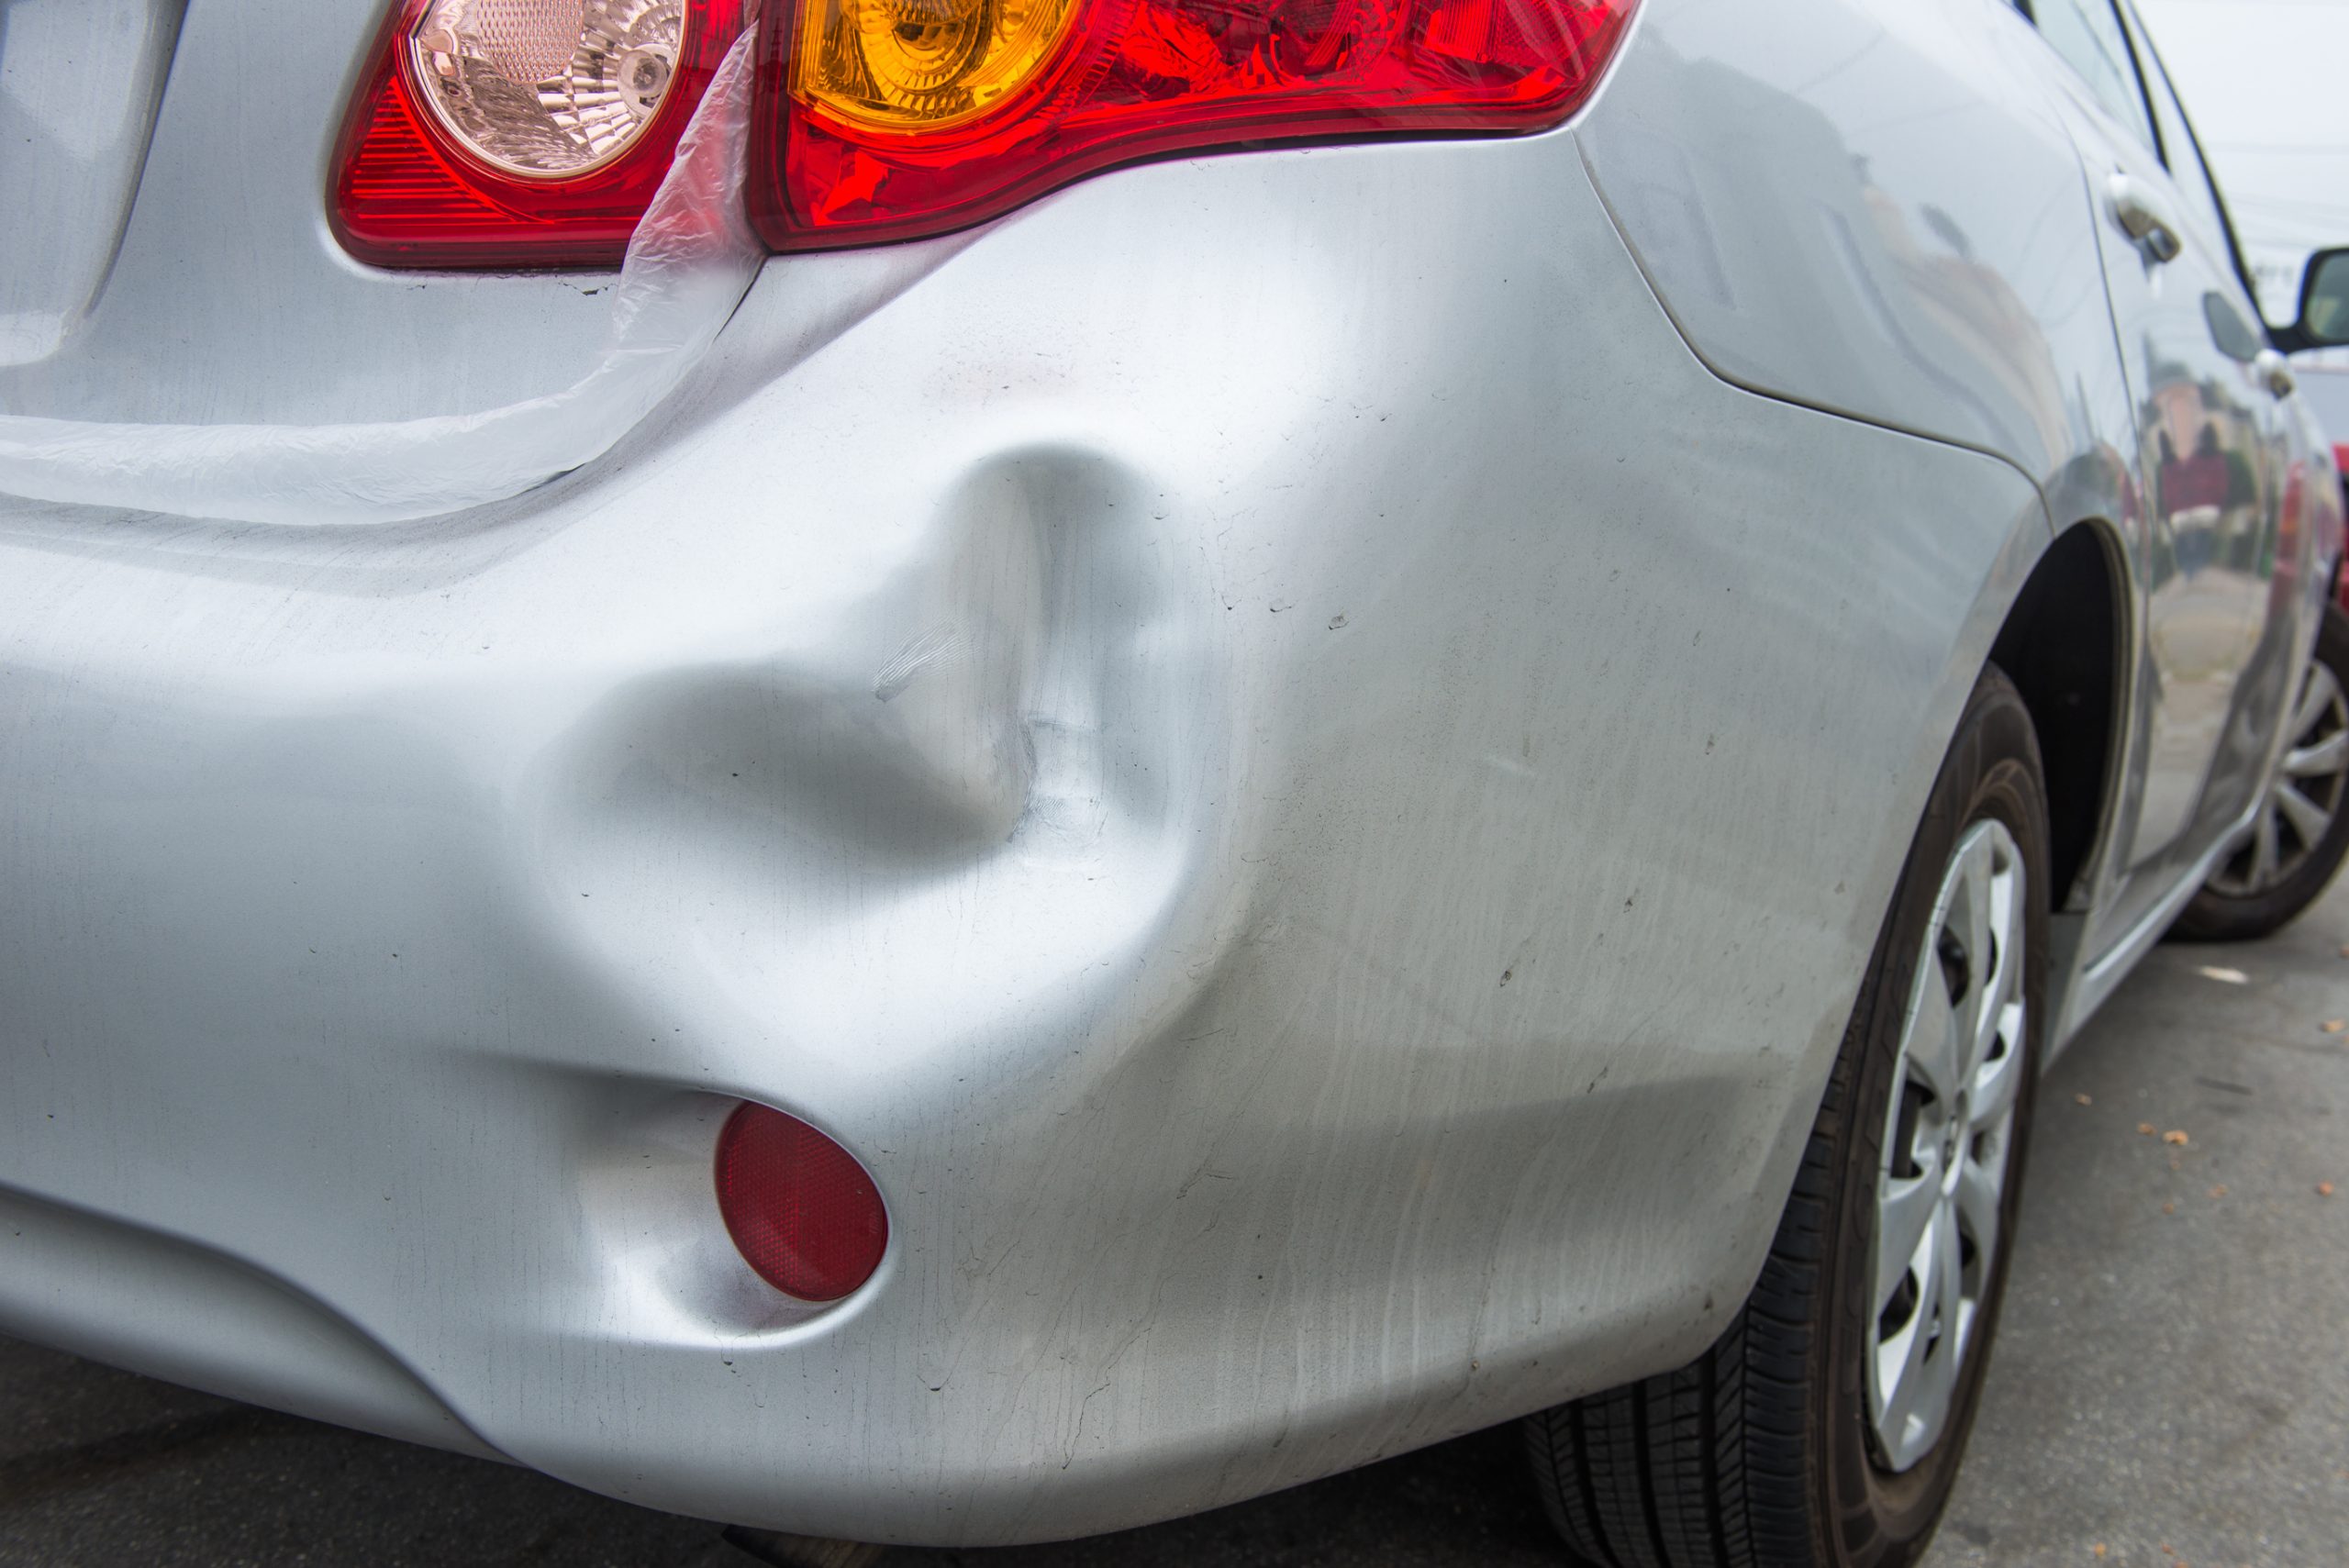 A car has a dented rear bumper